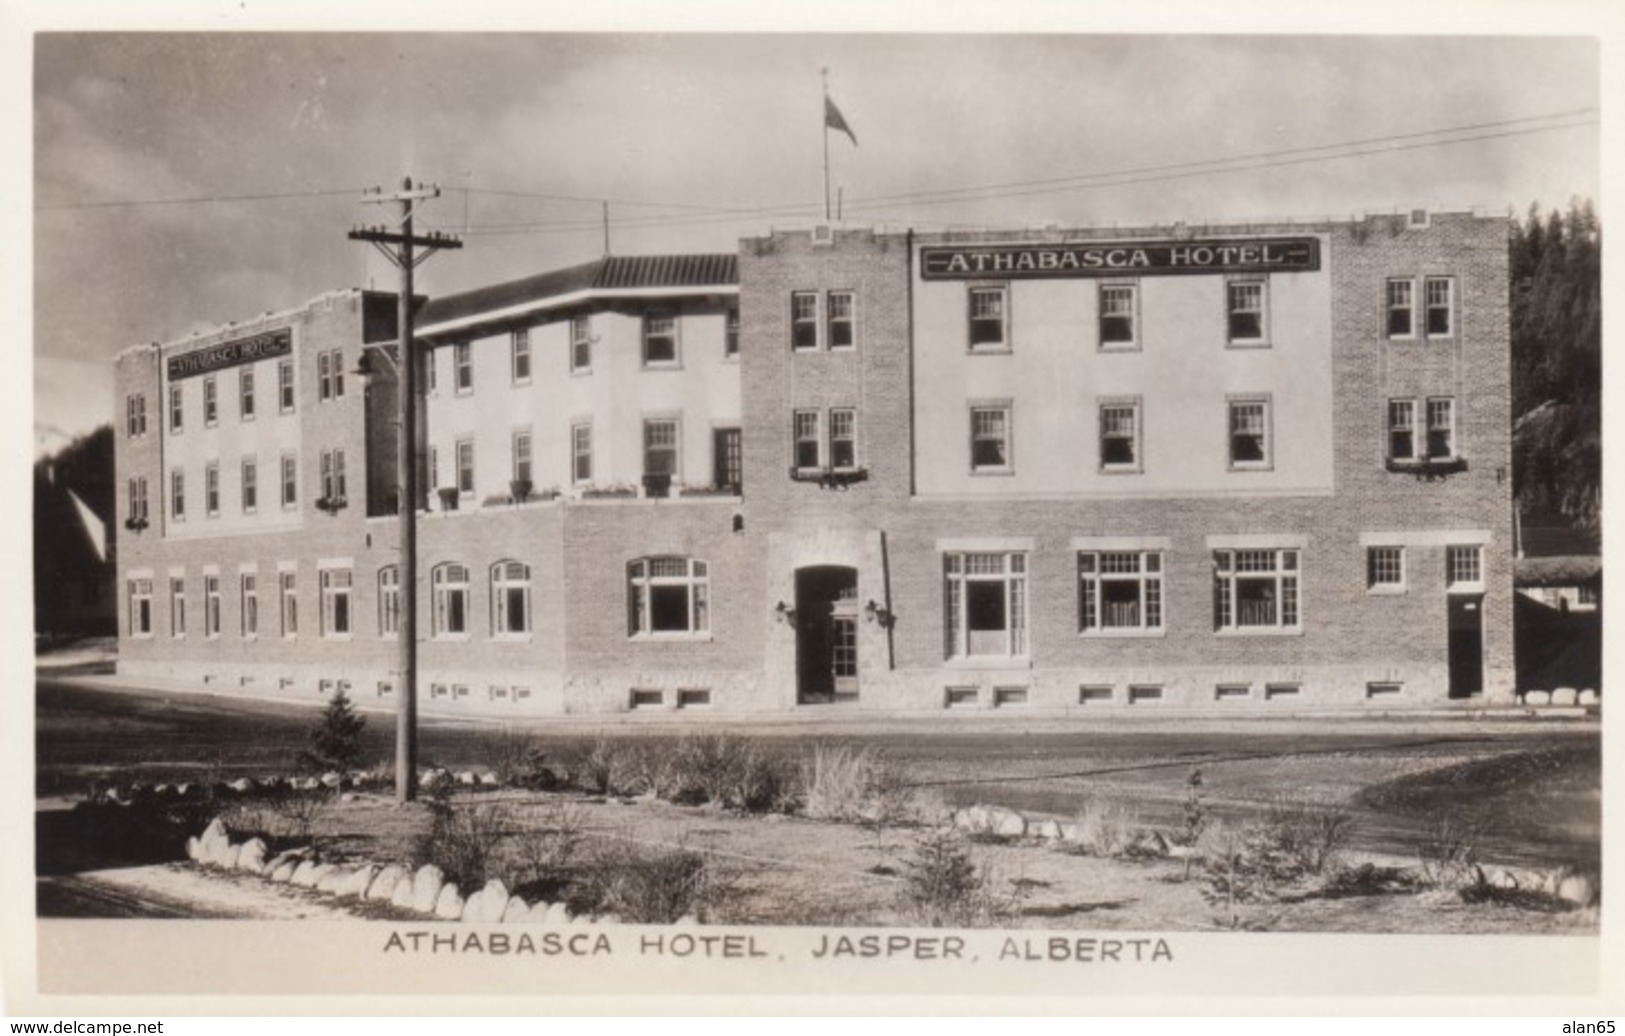 Jasper Alberta Canada, Athabasca Hotel, C1930s/40s Vintage Real Photo Postcard - Jasper